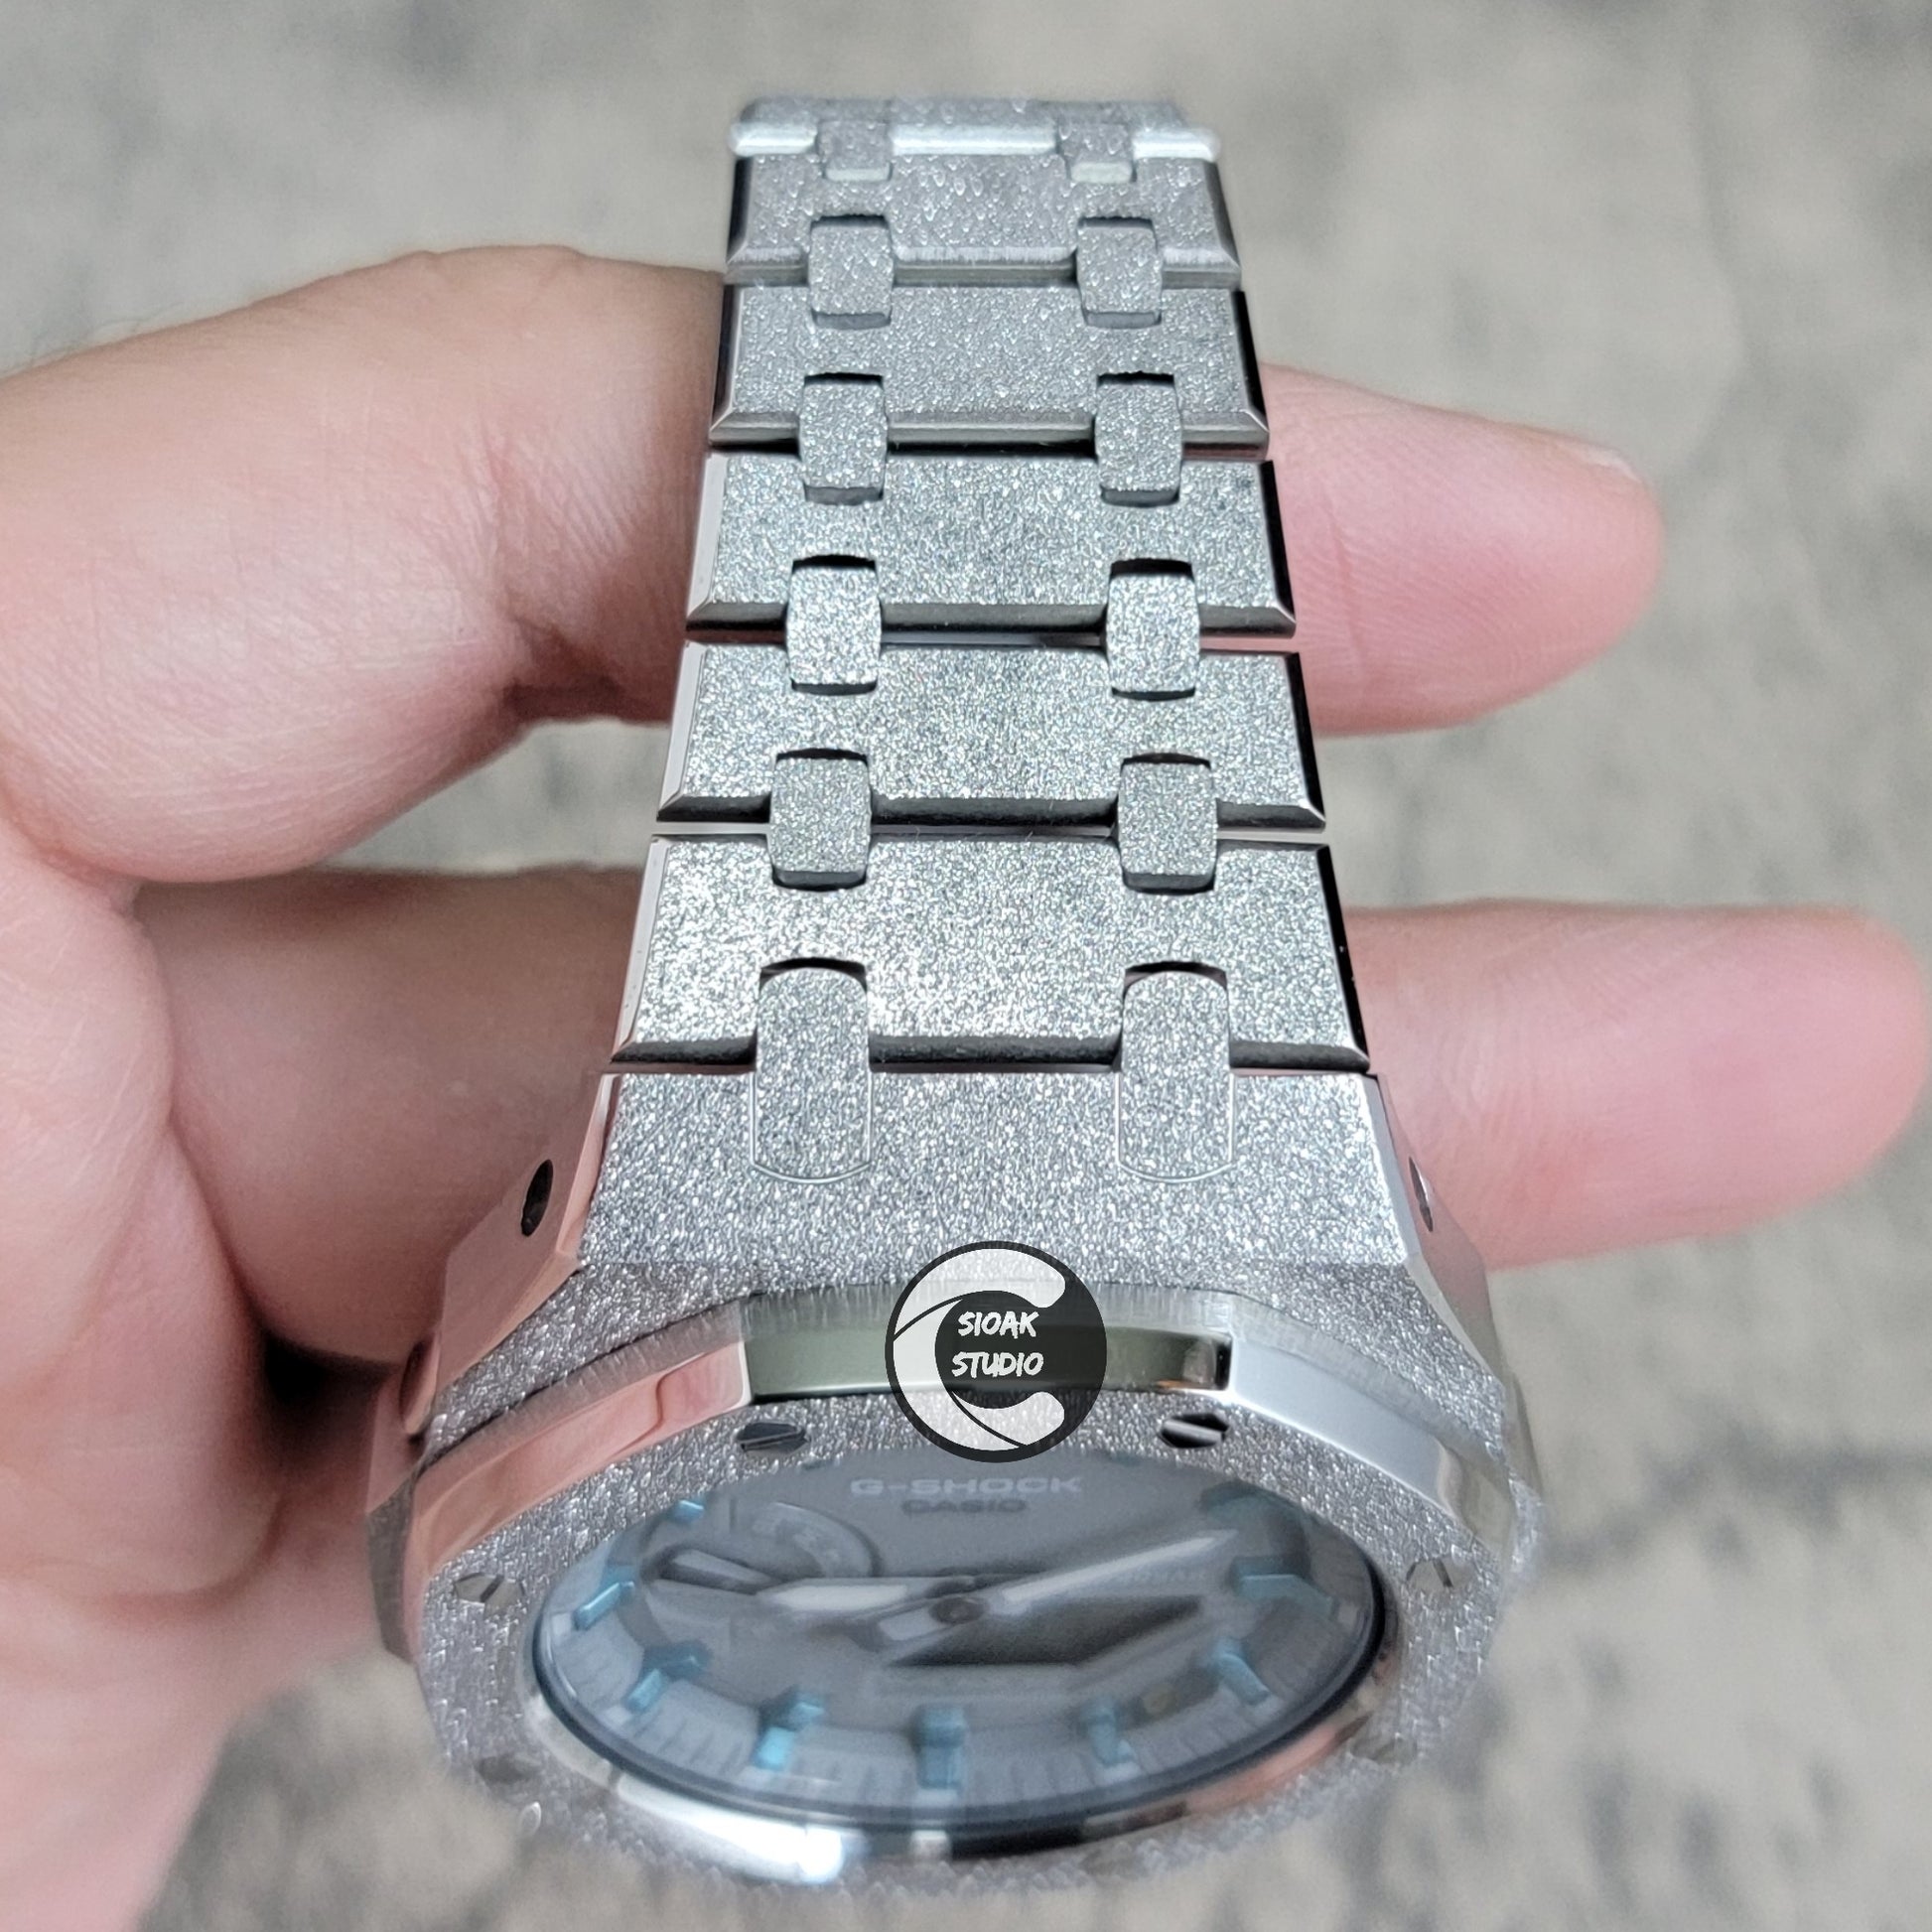 Casioak Mod Watch Frosted Silver Case Metal Strap Gray Blue Time Mark Gray Dial 44mm - Casioak Studio